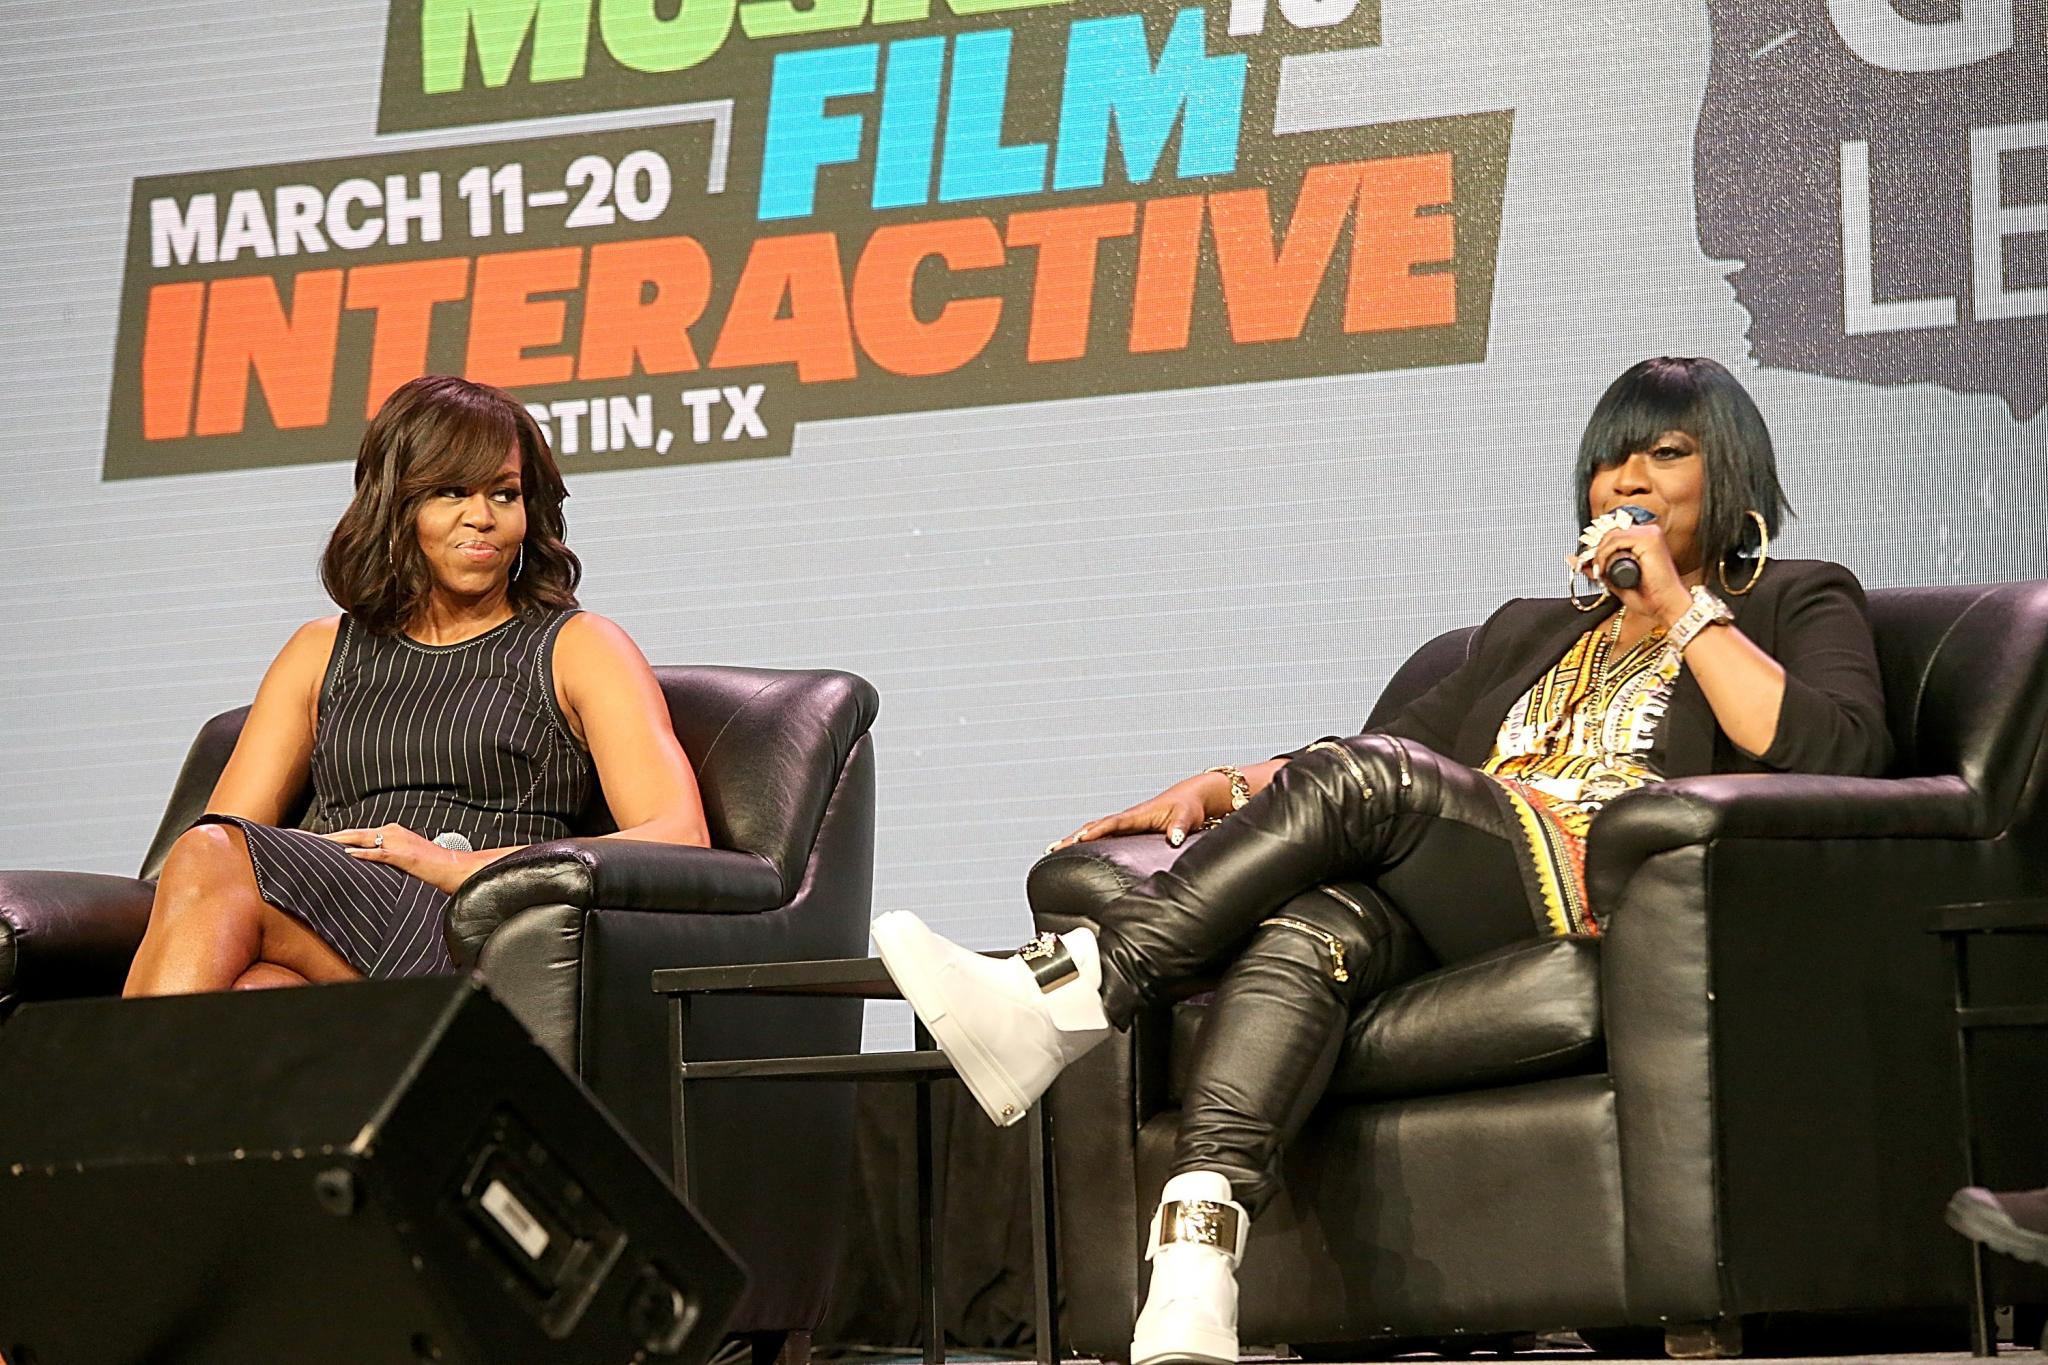 Michelle Obama, Queen Latifah, and Missy Elliot Talk Empowerment At SXSW
